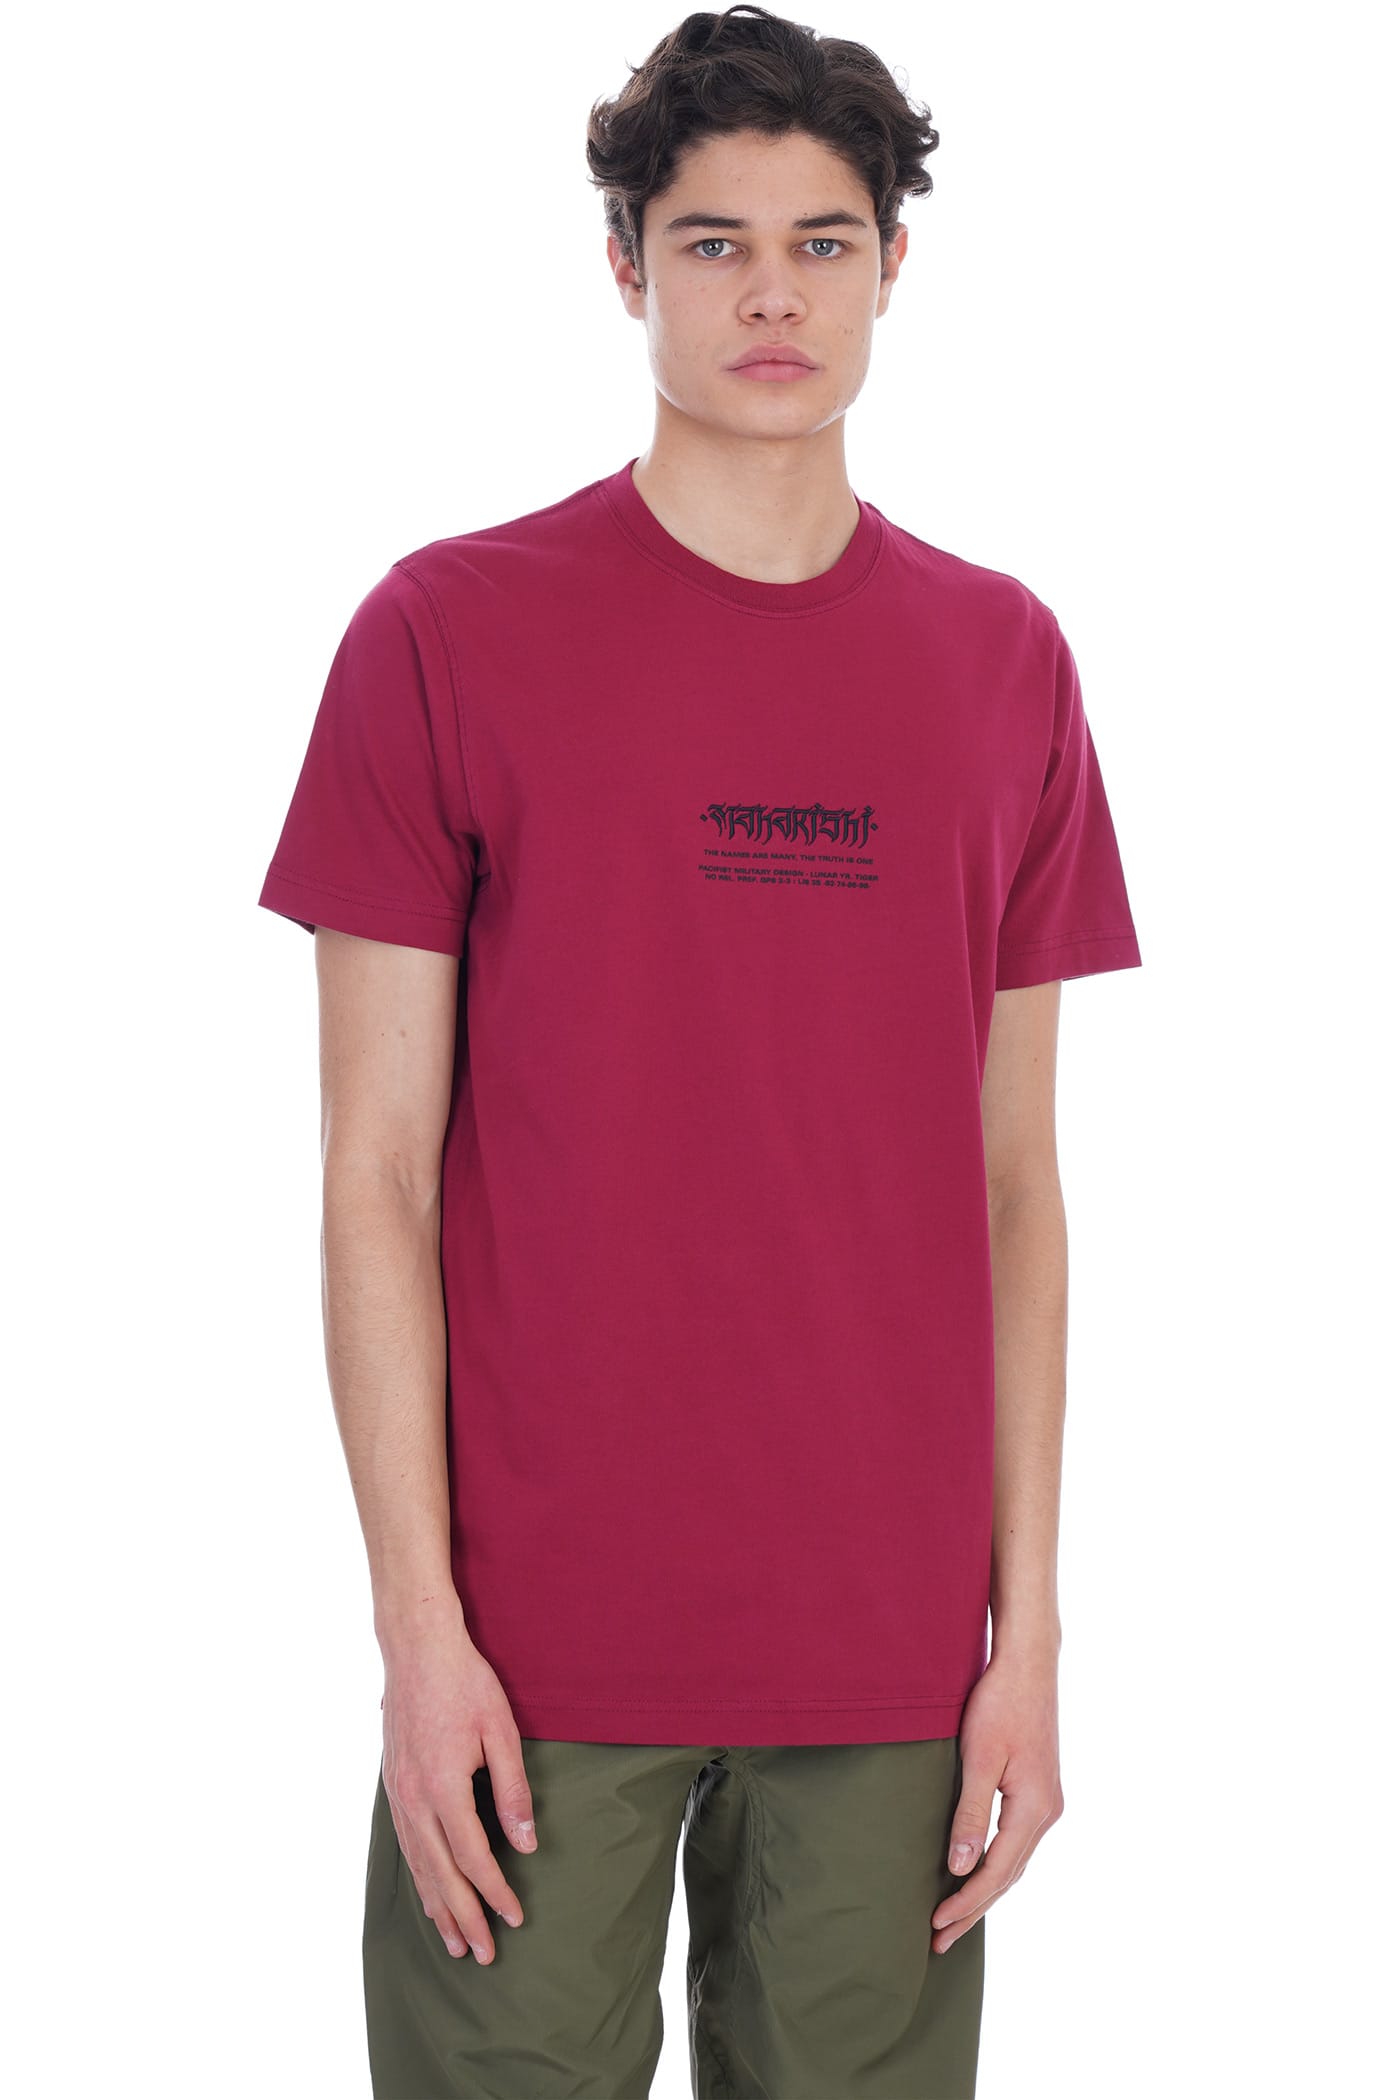 Maharishi T-shirt In Bordeaux Cotton